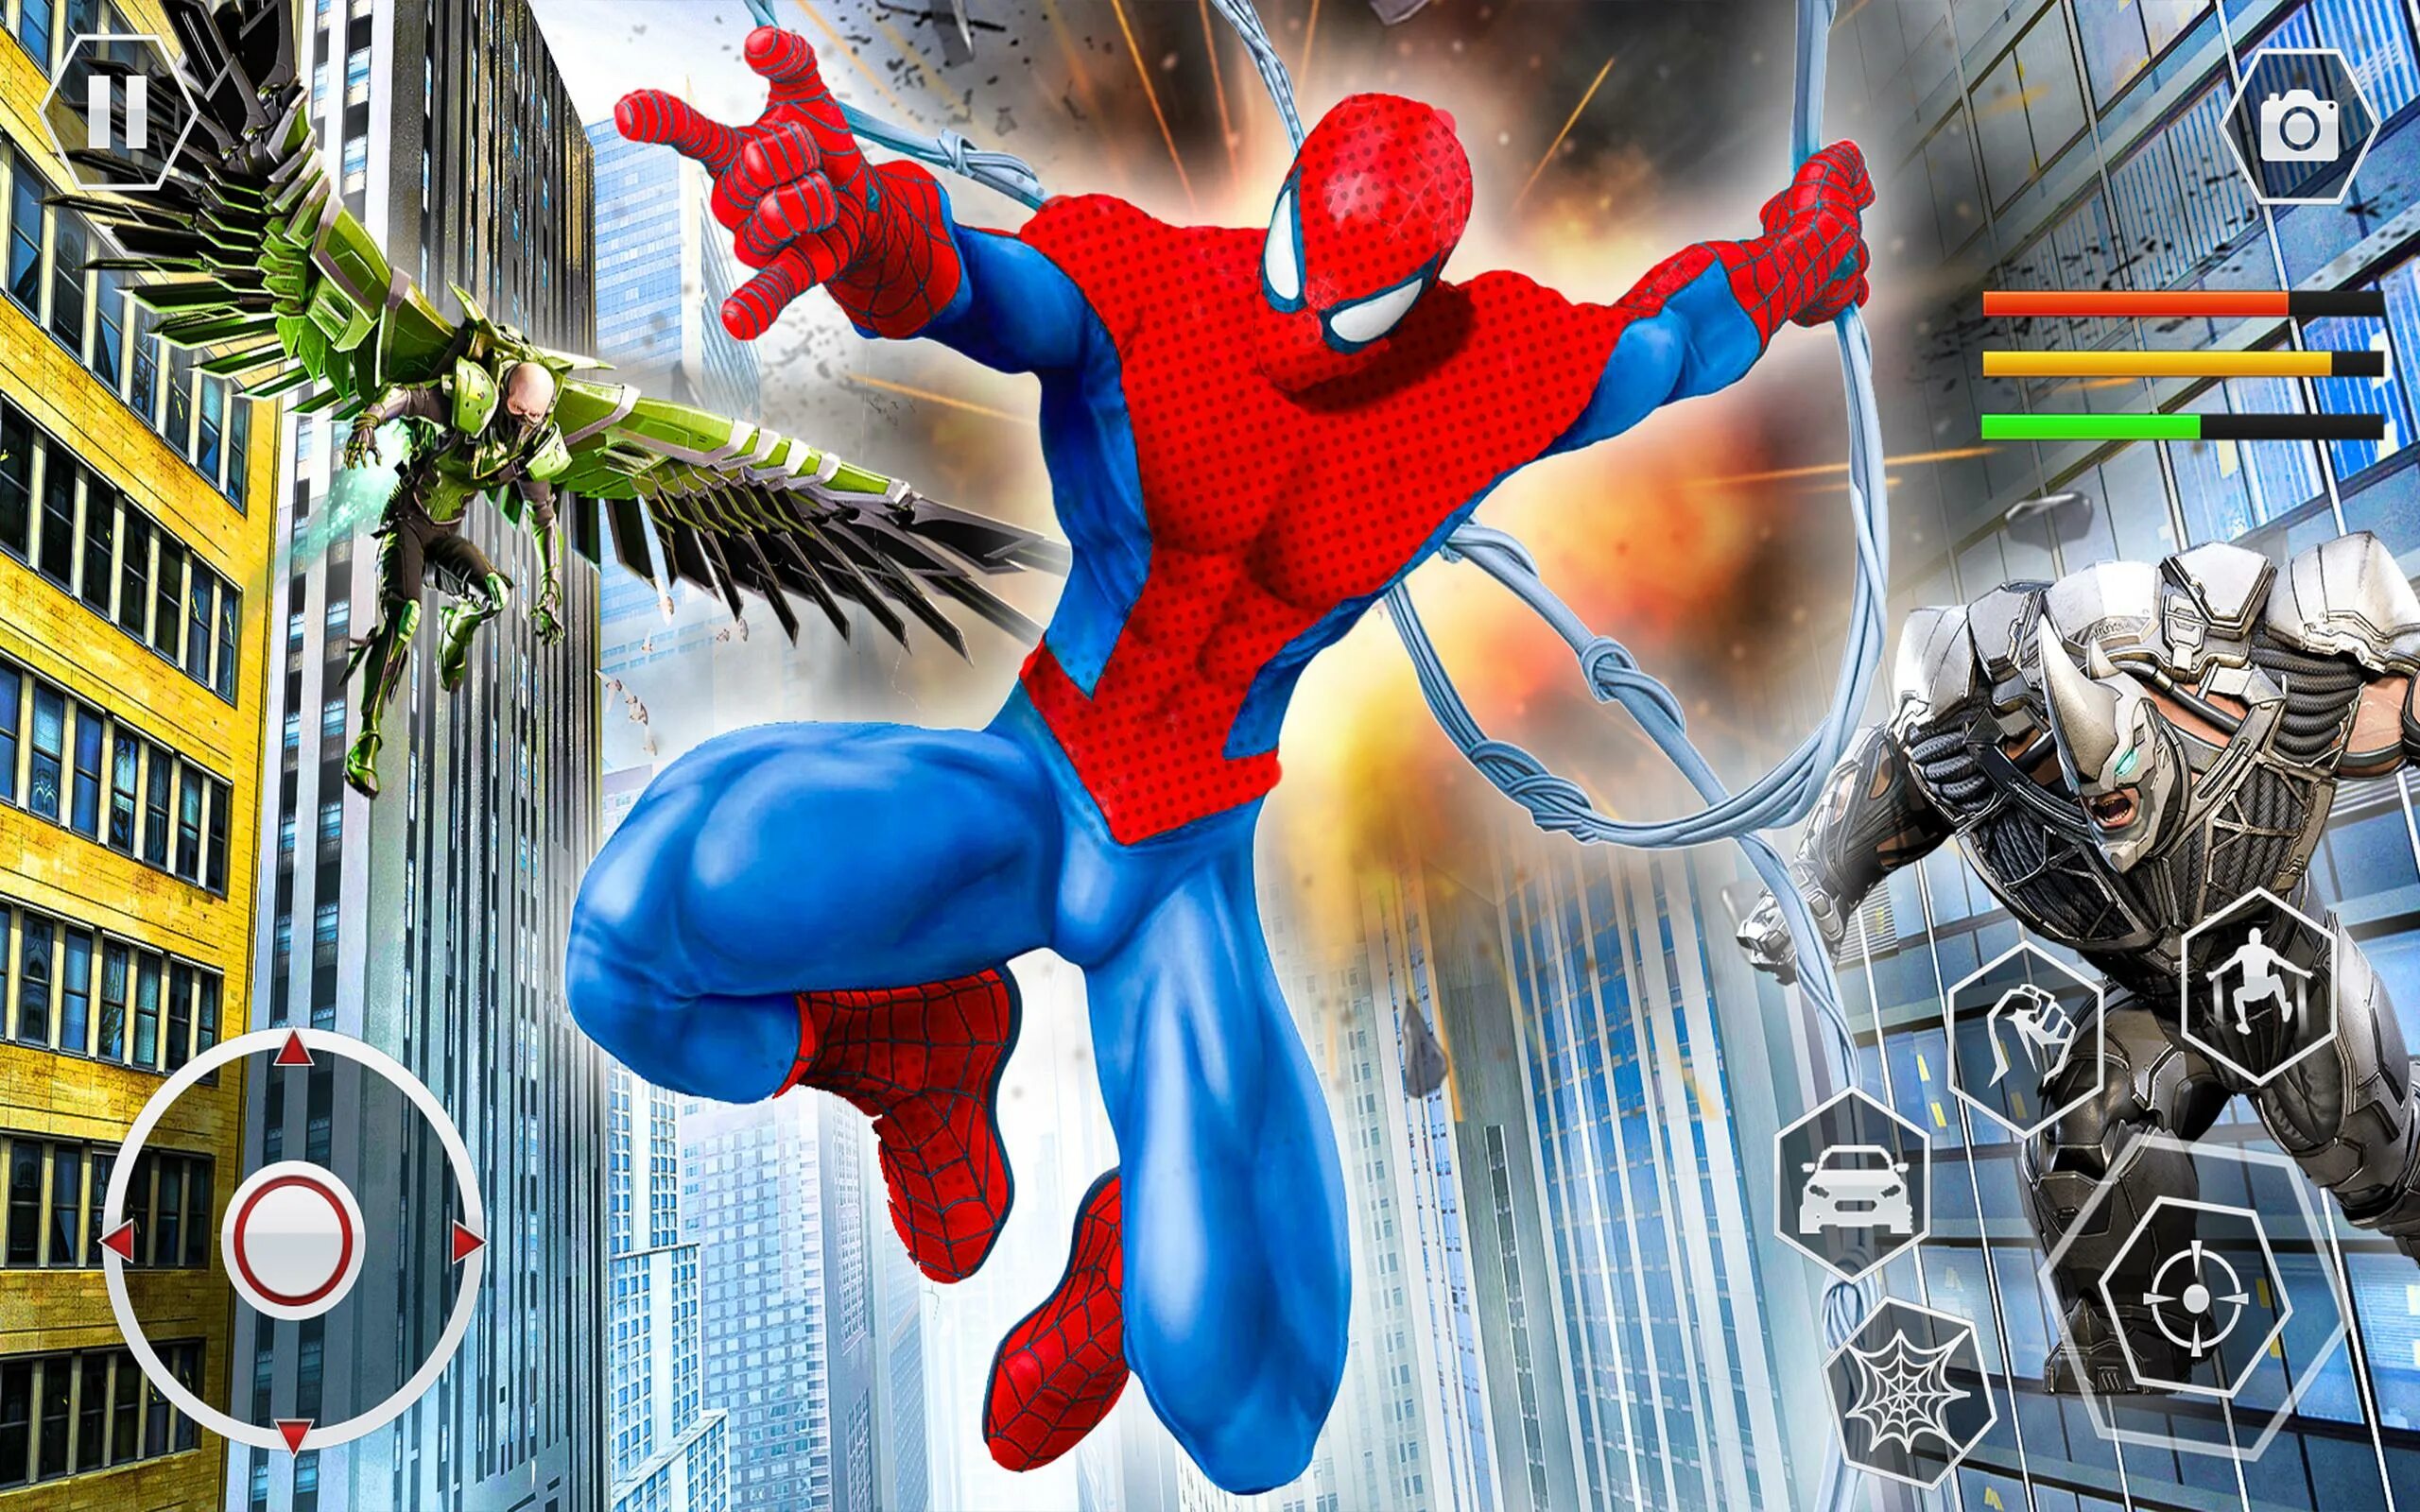 Superhero game. Супергерой игра. Человек паук в игре super Heroes. Человек паук на веревке. Spider Rope Hero City Battle игра.